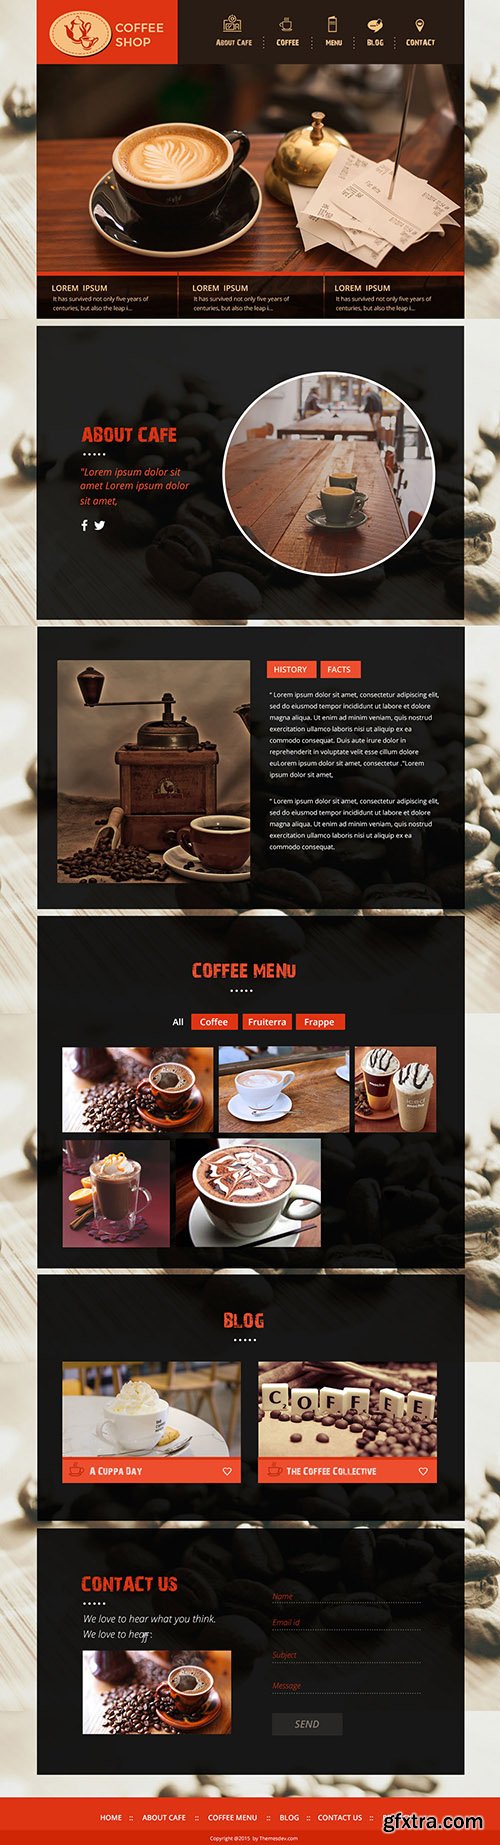 PSD Web Template - Coffee Shop - One Page Theme